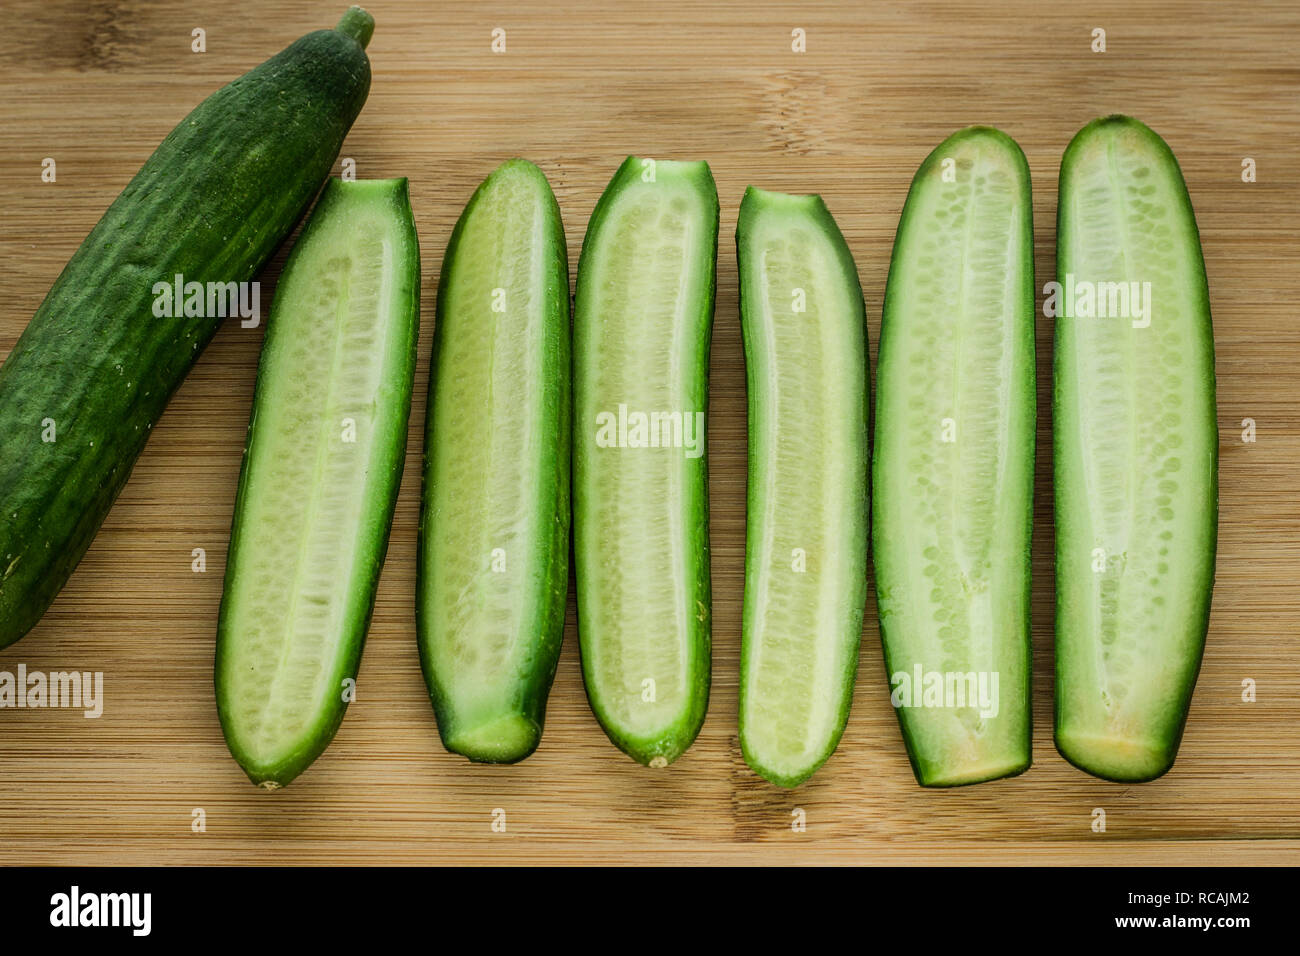 https://c8.alamy.com/comp/RCAJM2/crisp-and-green-mini-cucumbers-RCAJM2.jpg